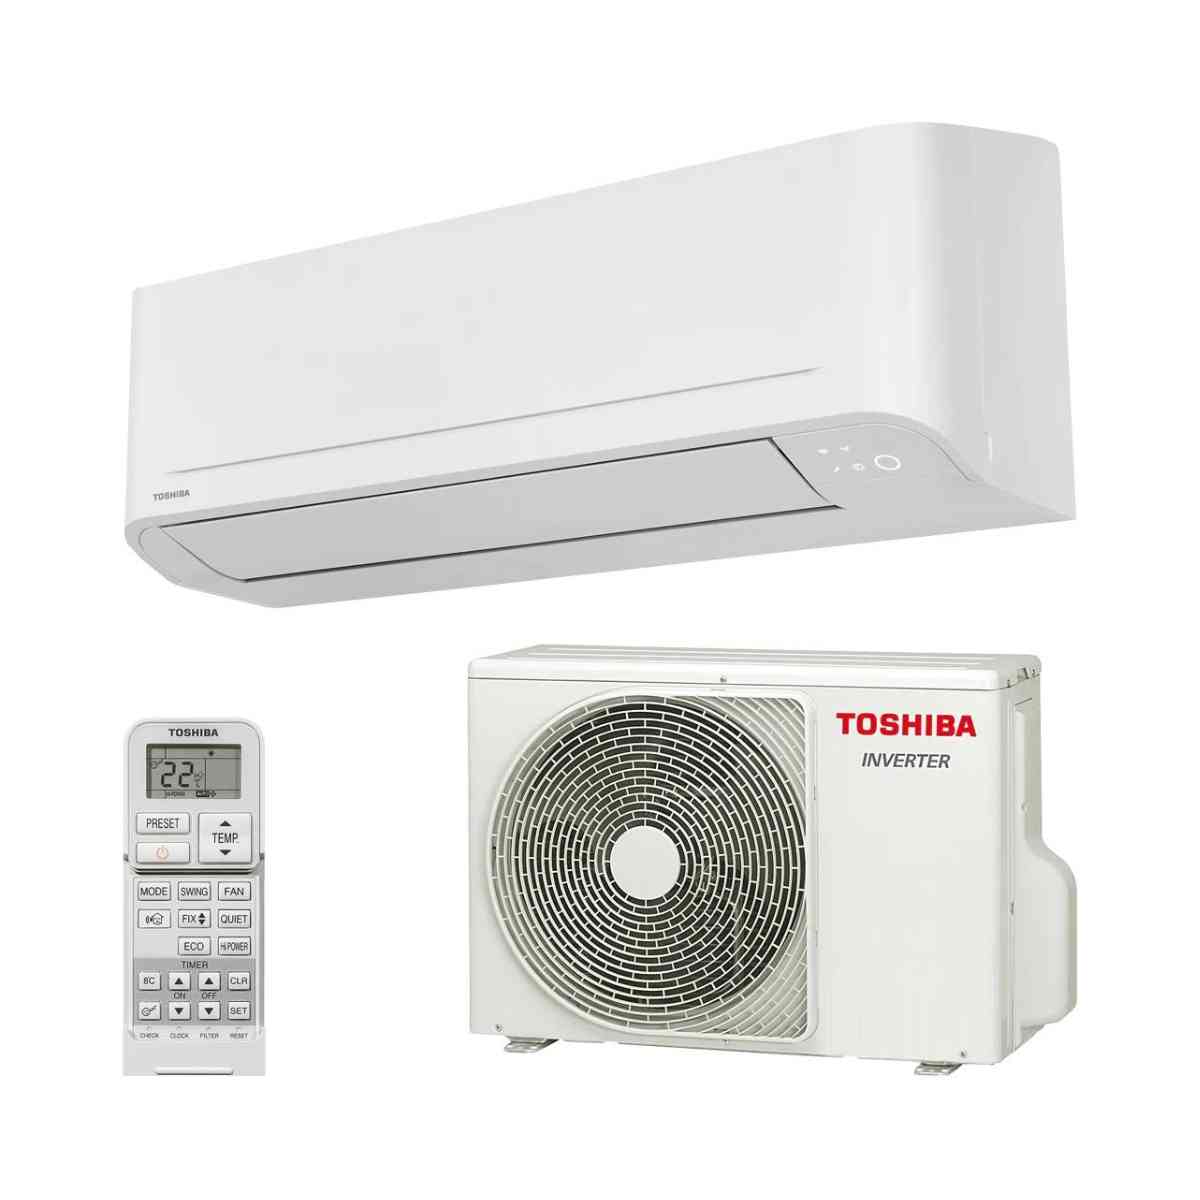 Ar condicionado fixo 1x1 Toshiba Seiya+ 16 14322 BTU com referência SEIYA+ 16 da marca TOSHIBA